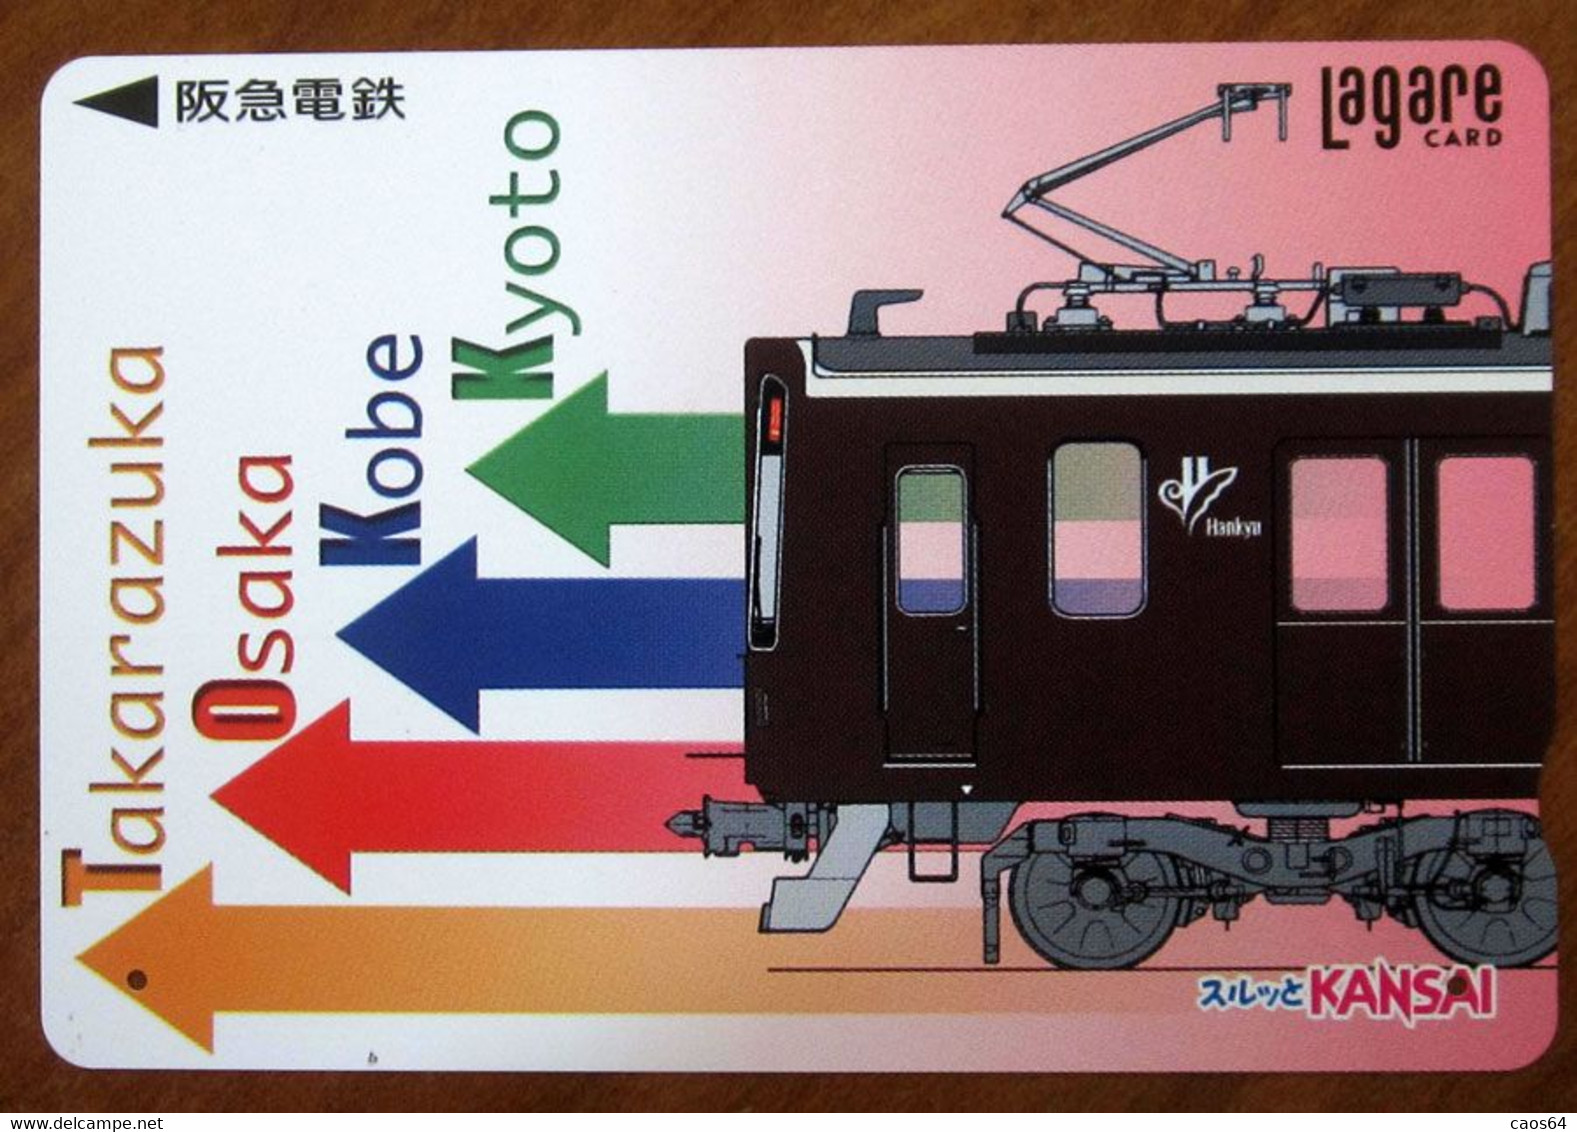 GIAPPONE Ticket Biglietto Treni City Train - Hankyu Railway Kansai Railway Lagare Card 3.000 ¥ - Usato - Mundo